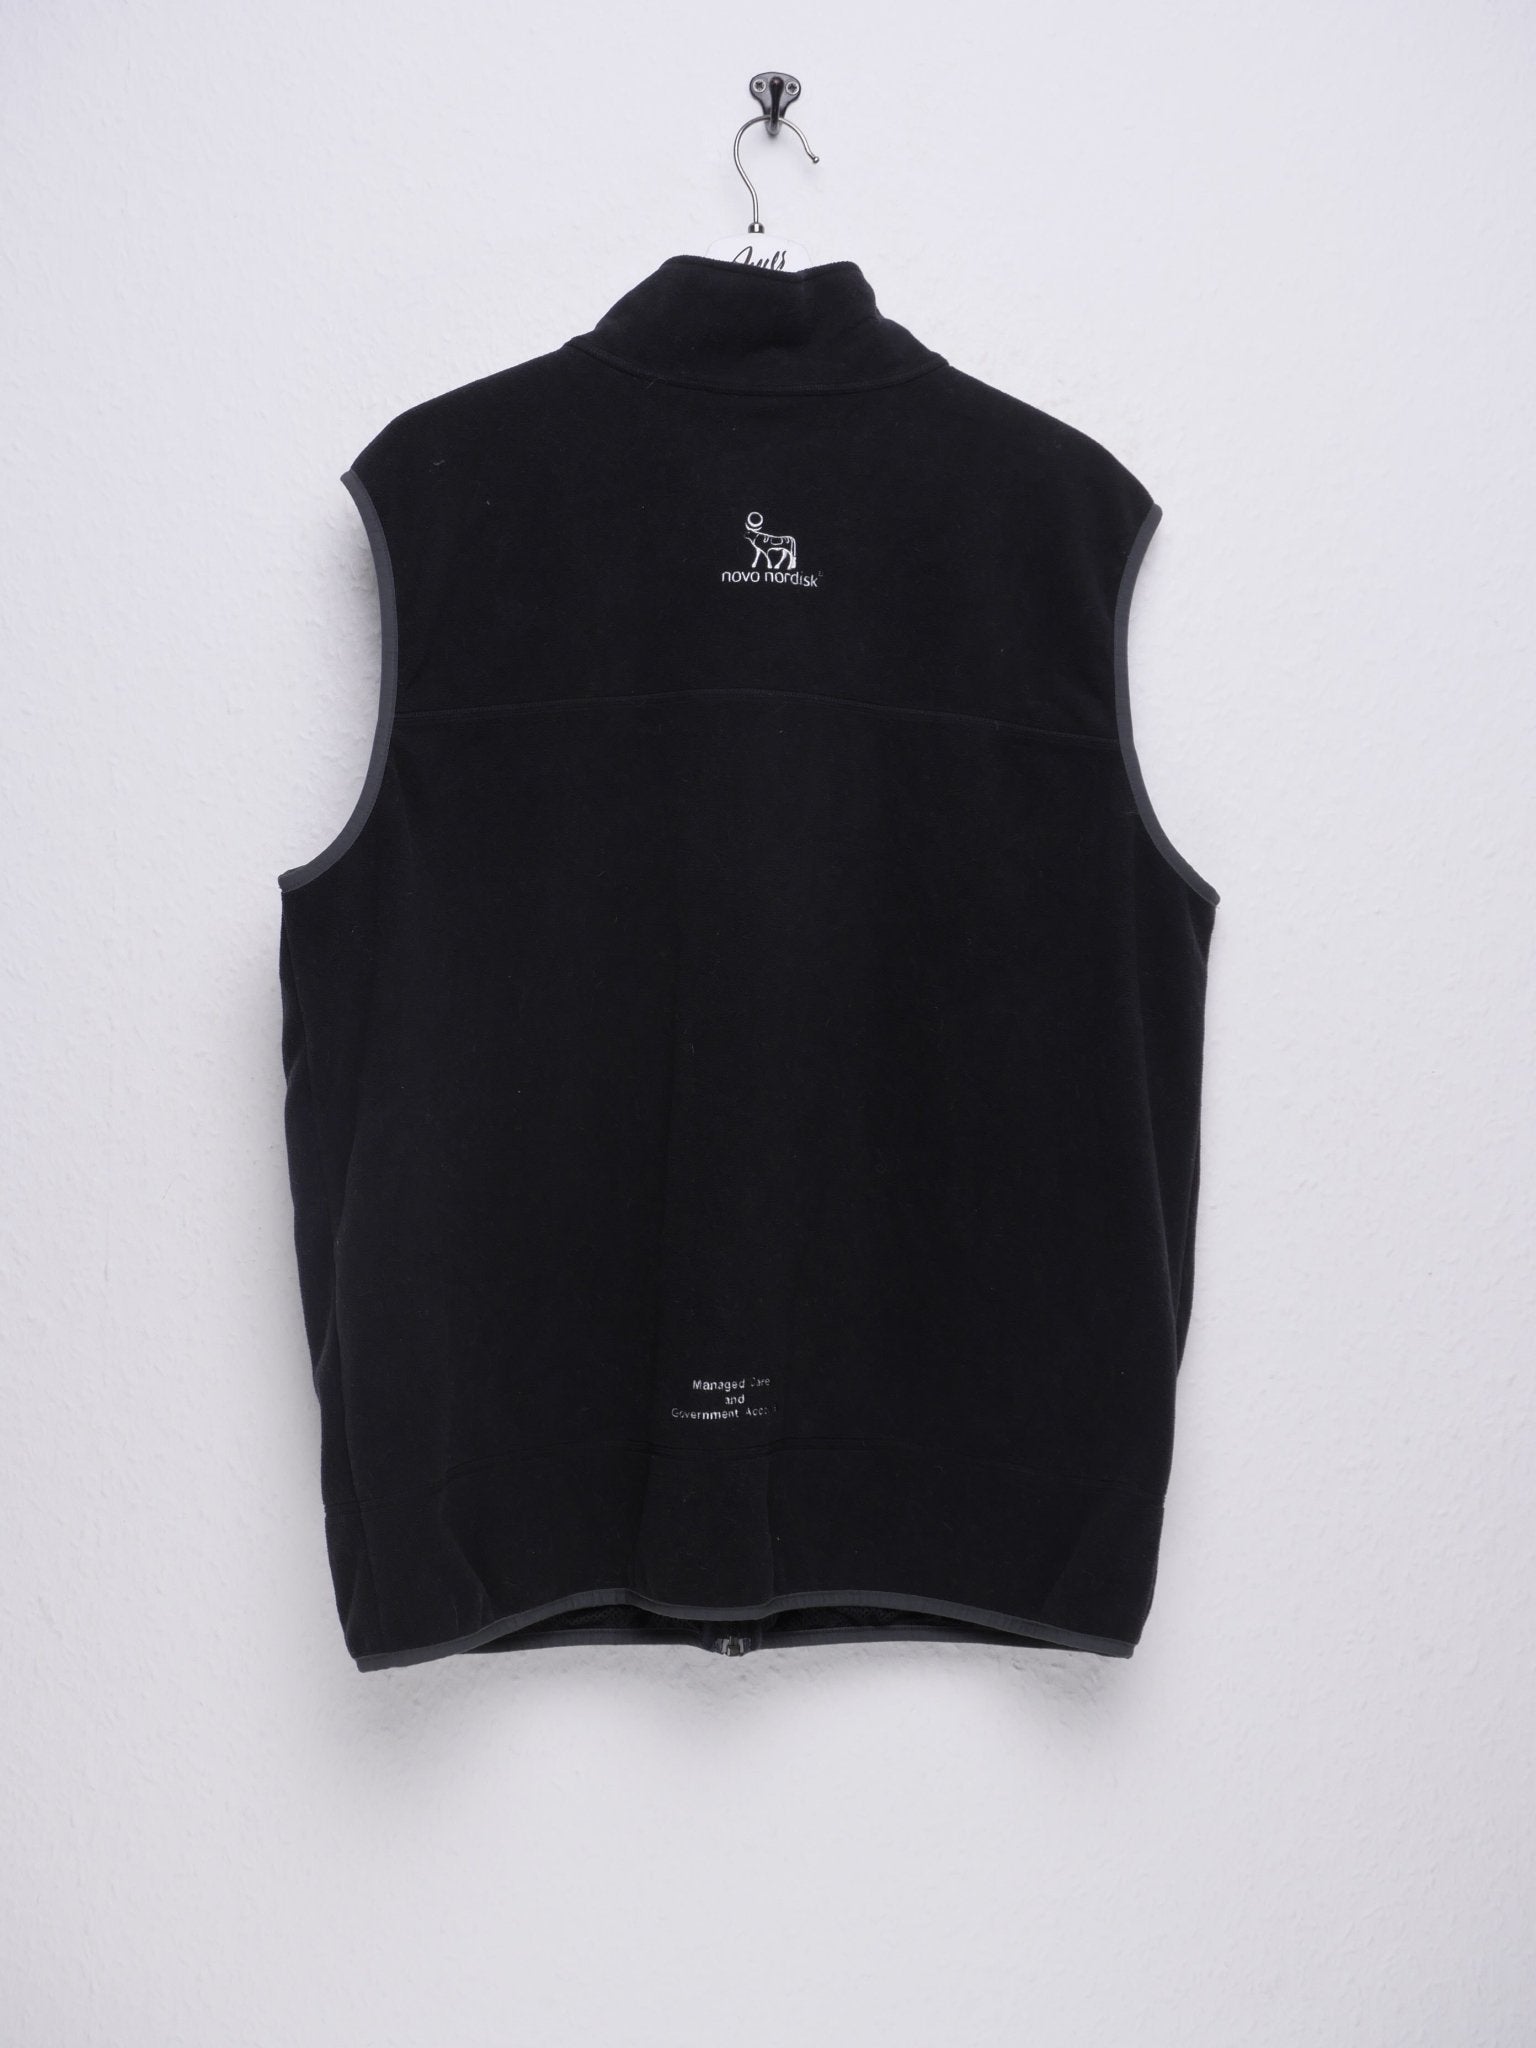 LL Bean embroidered Logo black basic Fleece Vest Jacke - Peeces